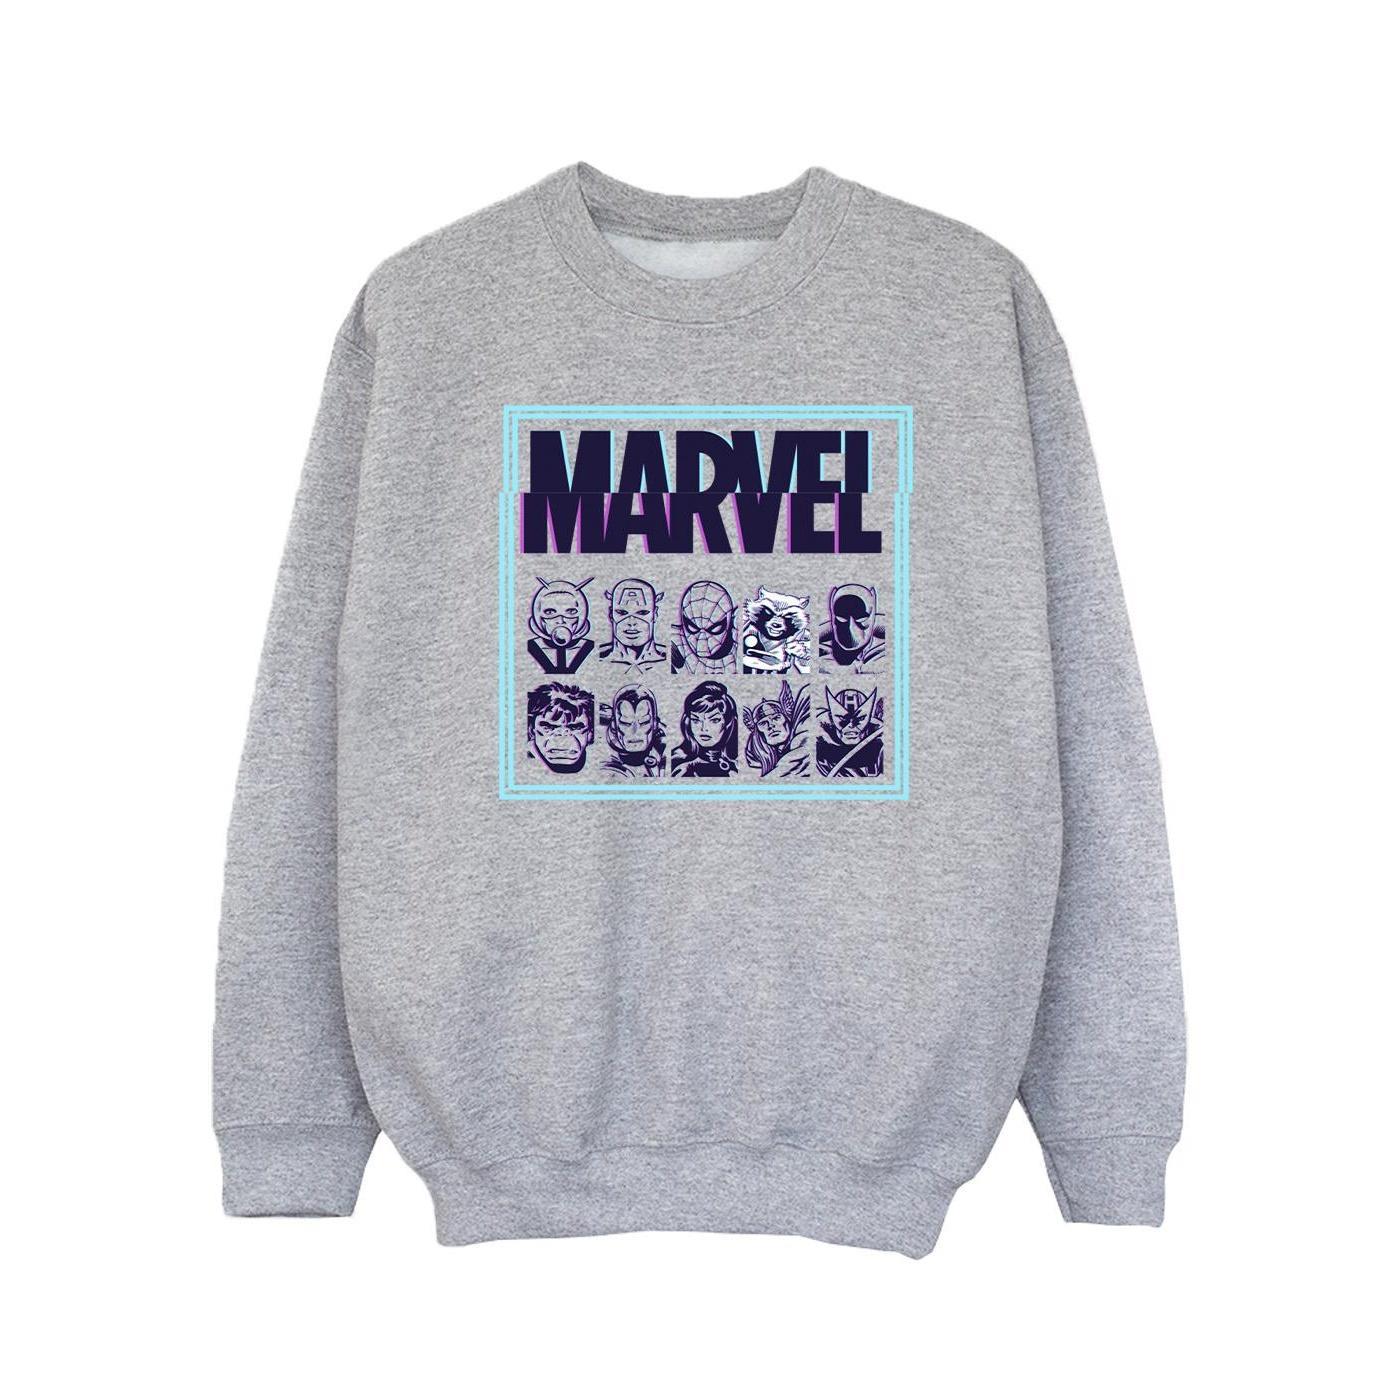 Marvel Girls Comics Glitch Sweatshirt (Sports Grey) (3-4 Years)